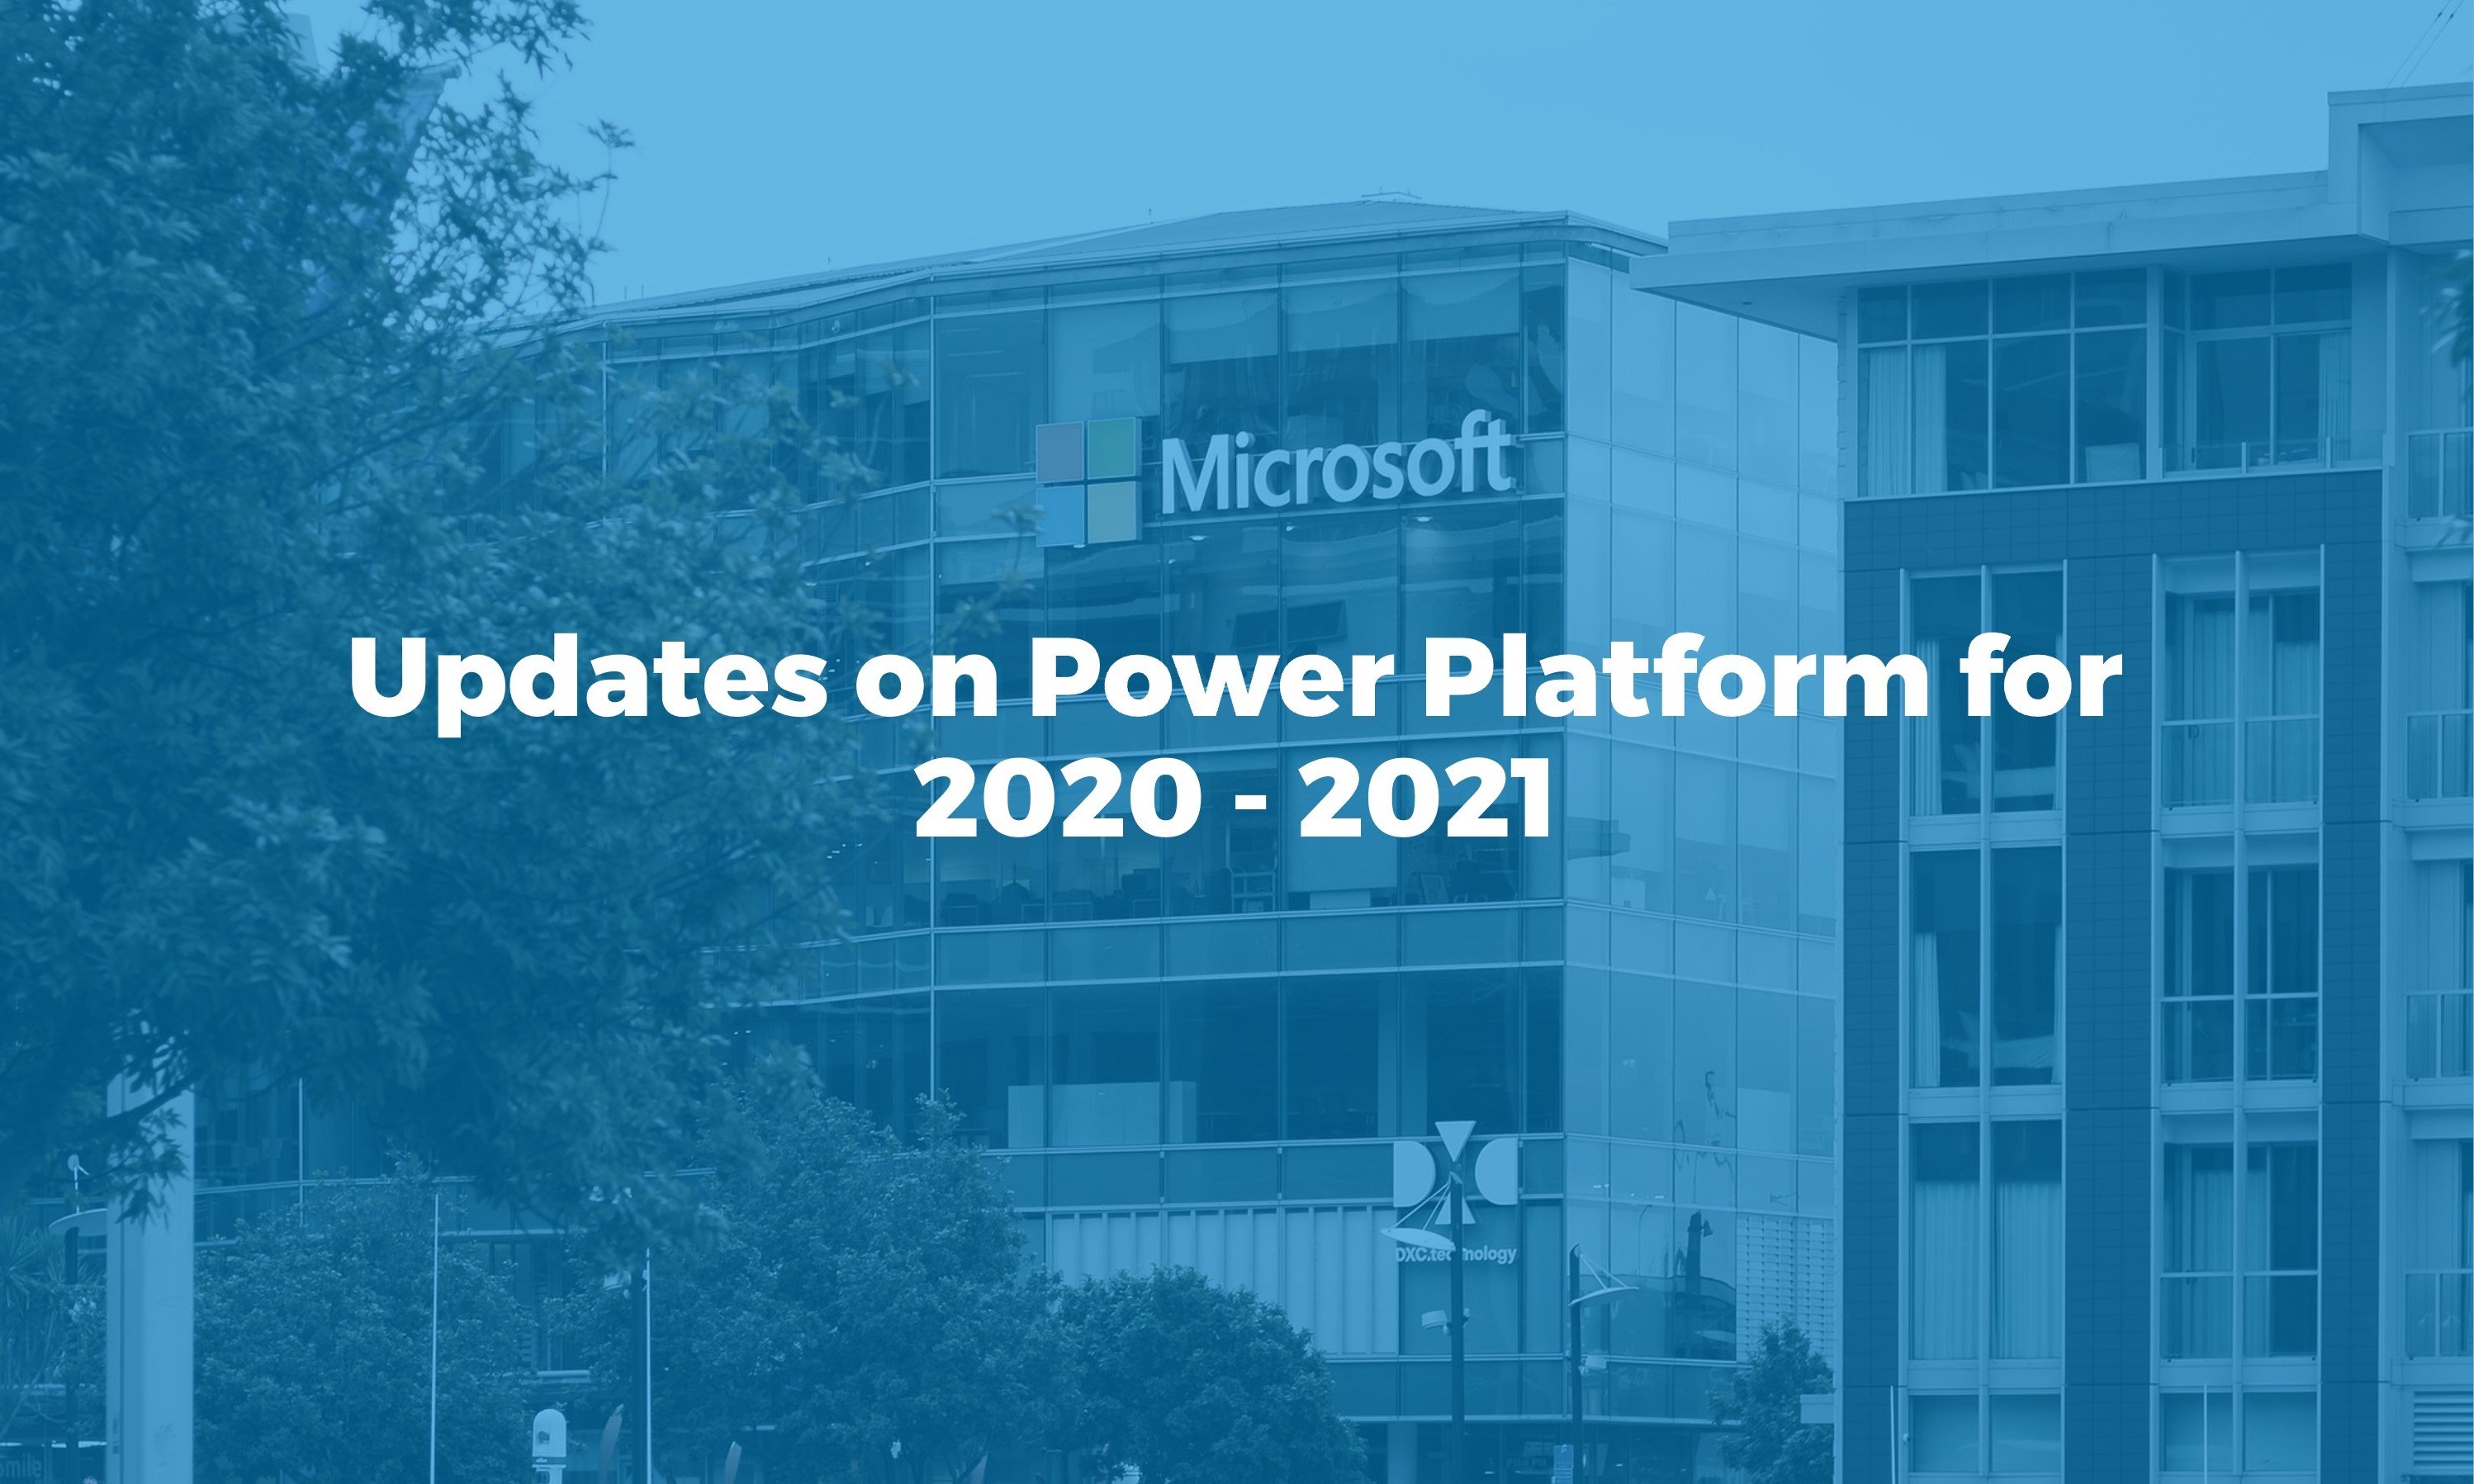 New updates for Power Platform